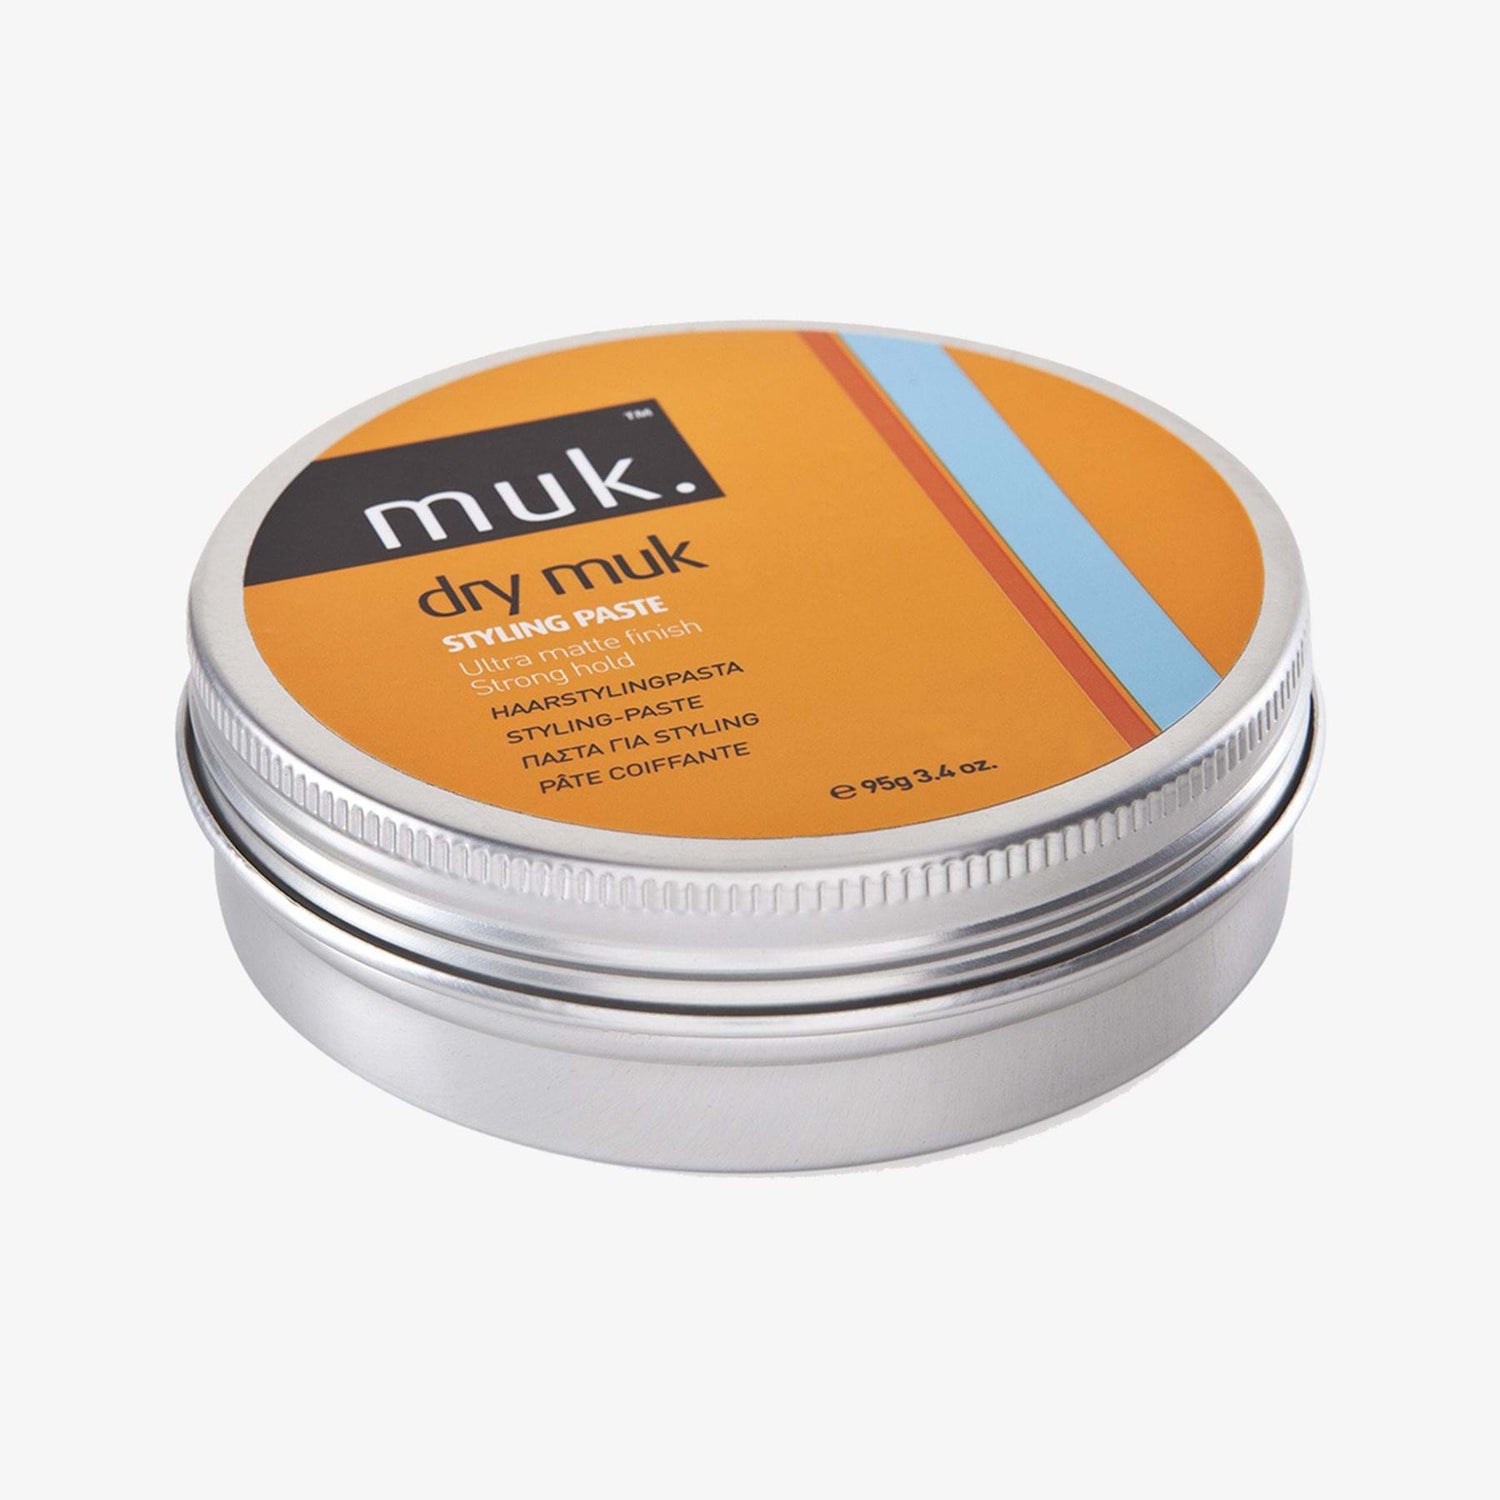 MUK Dry Muk Styling Paste - 95g